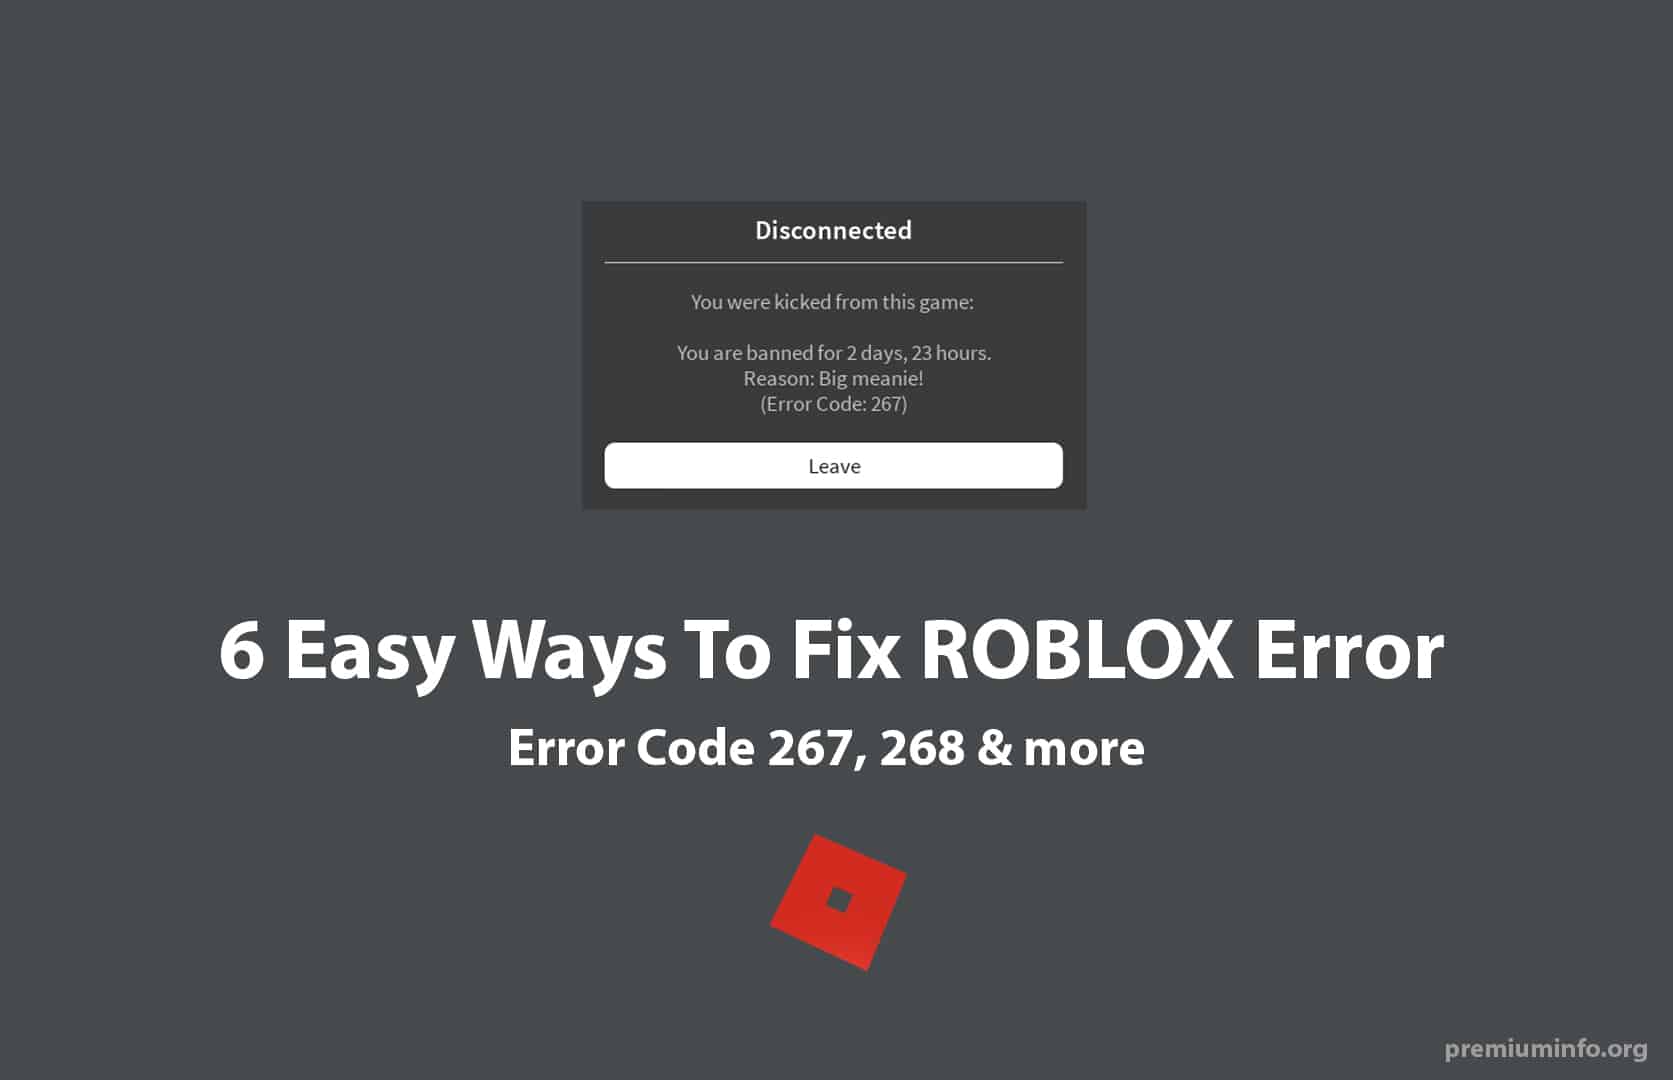 Fixed 6 Ways To Fix Roblox Error Code 267 Premiuminfo - what is error 268 on roblox